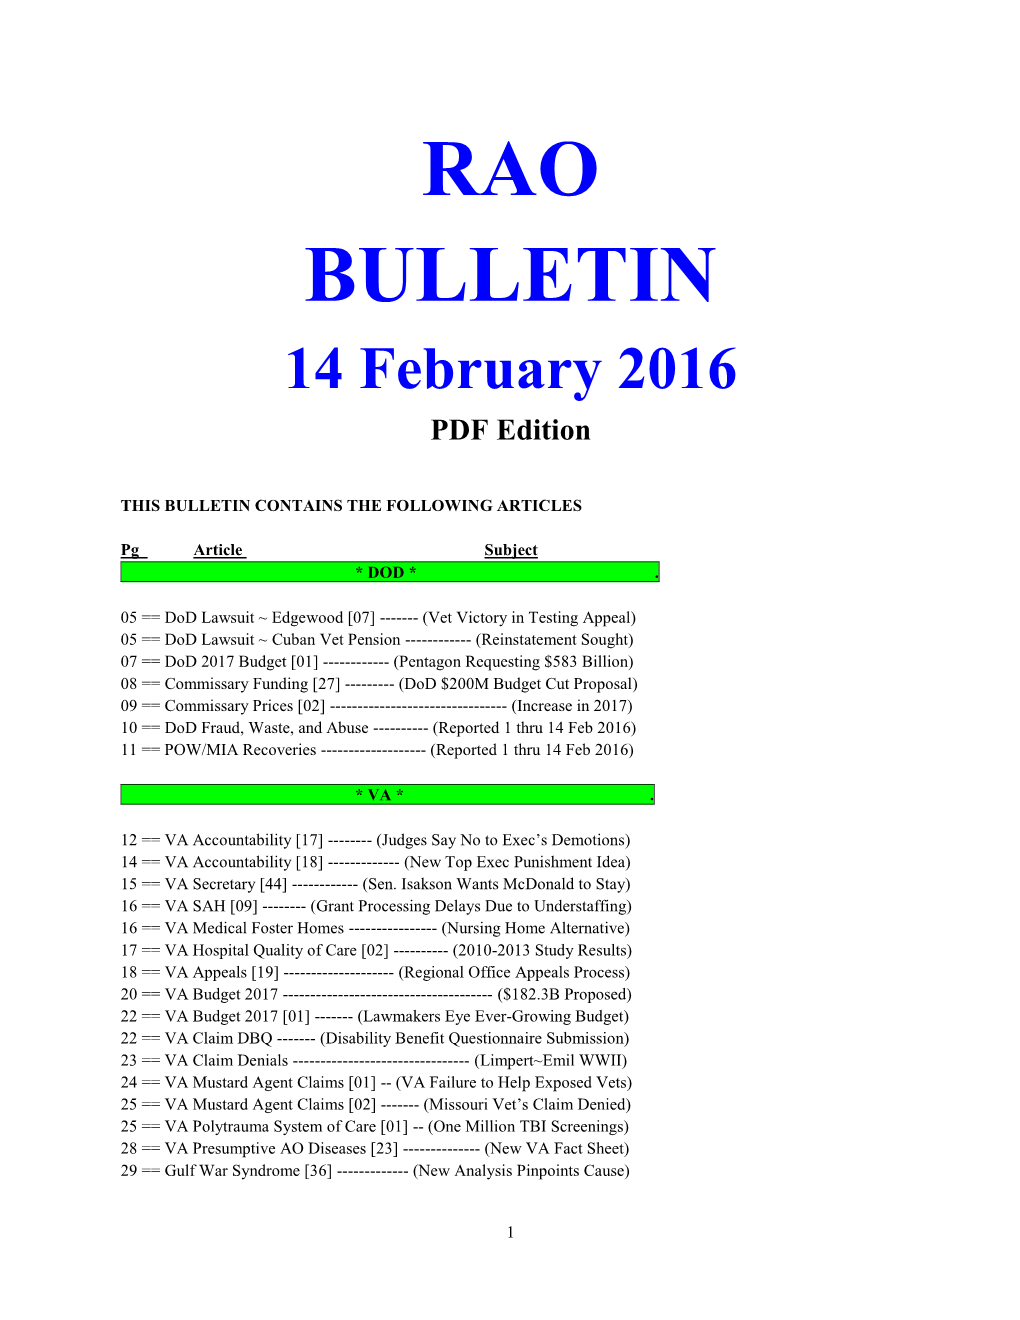 RAO BULLETIN 14 February 2016 PDF Edition